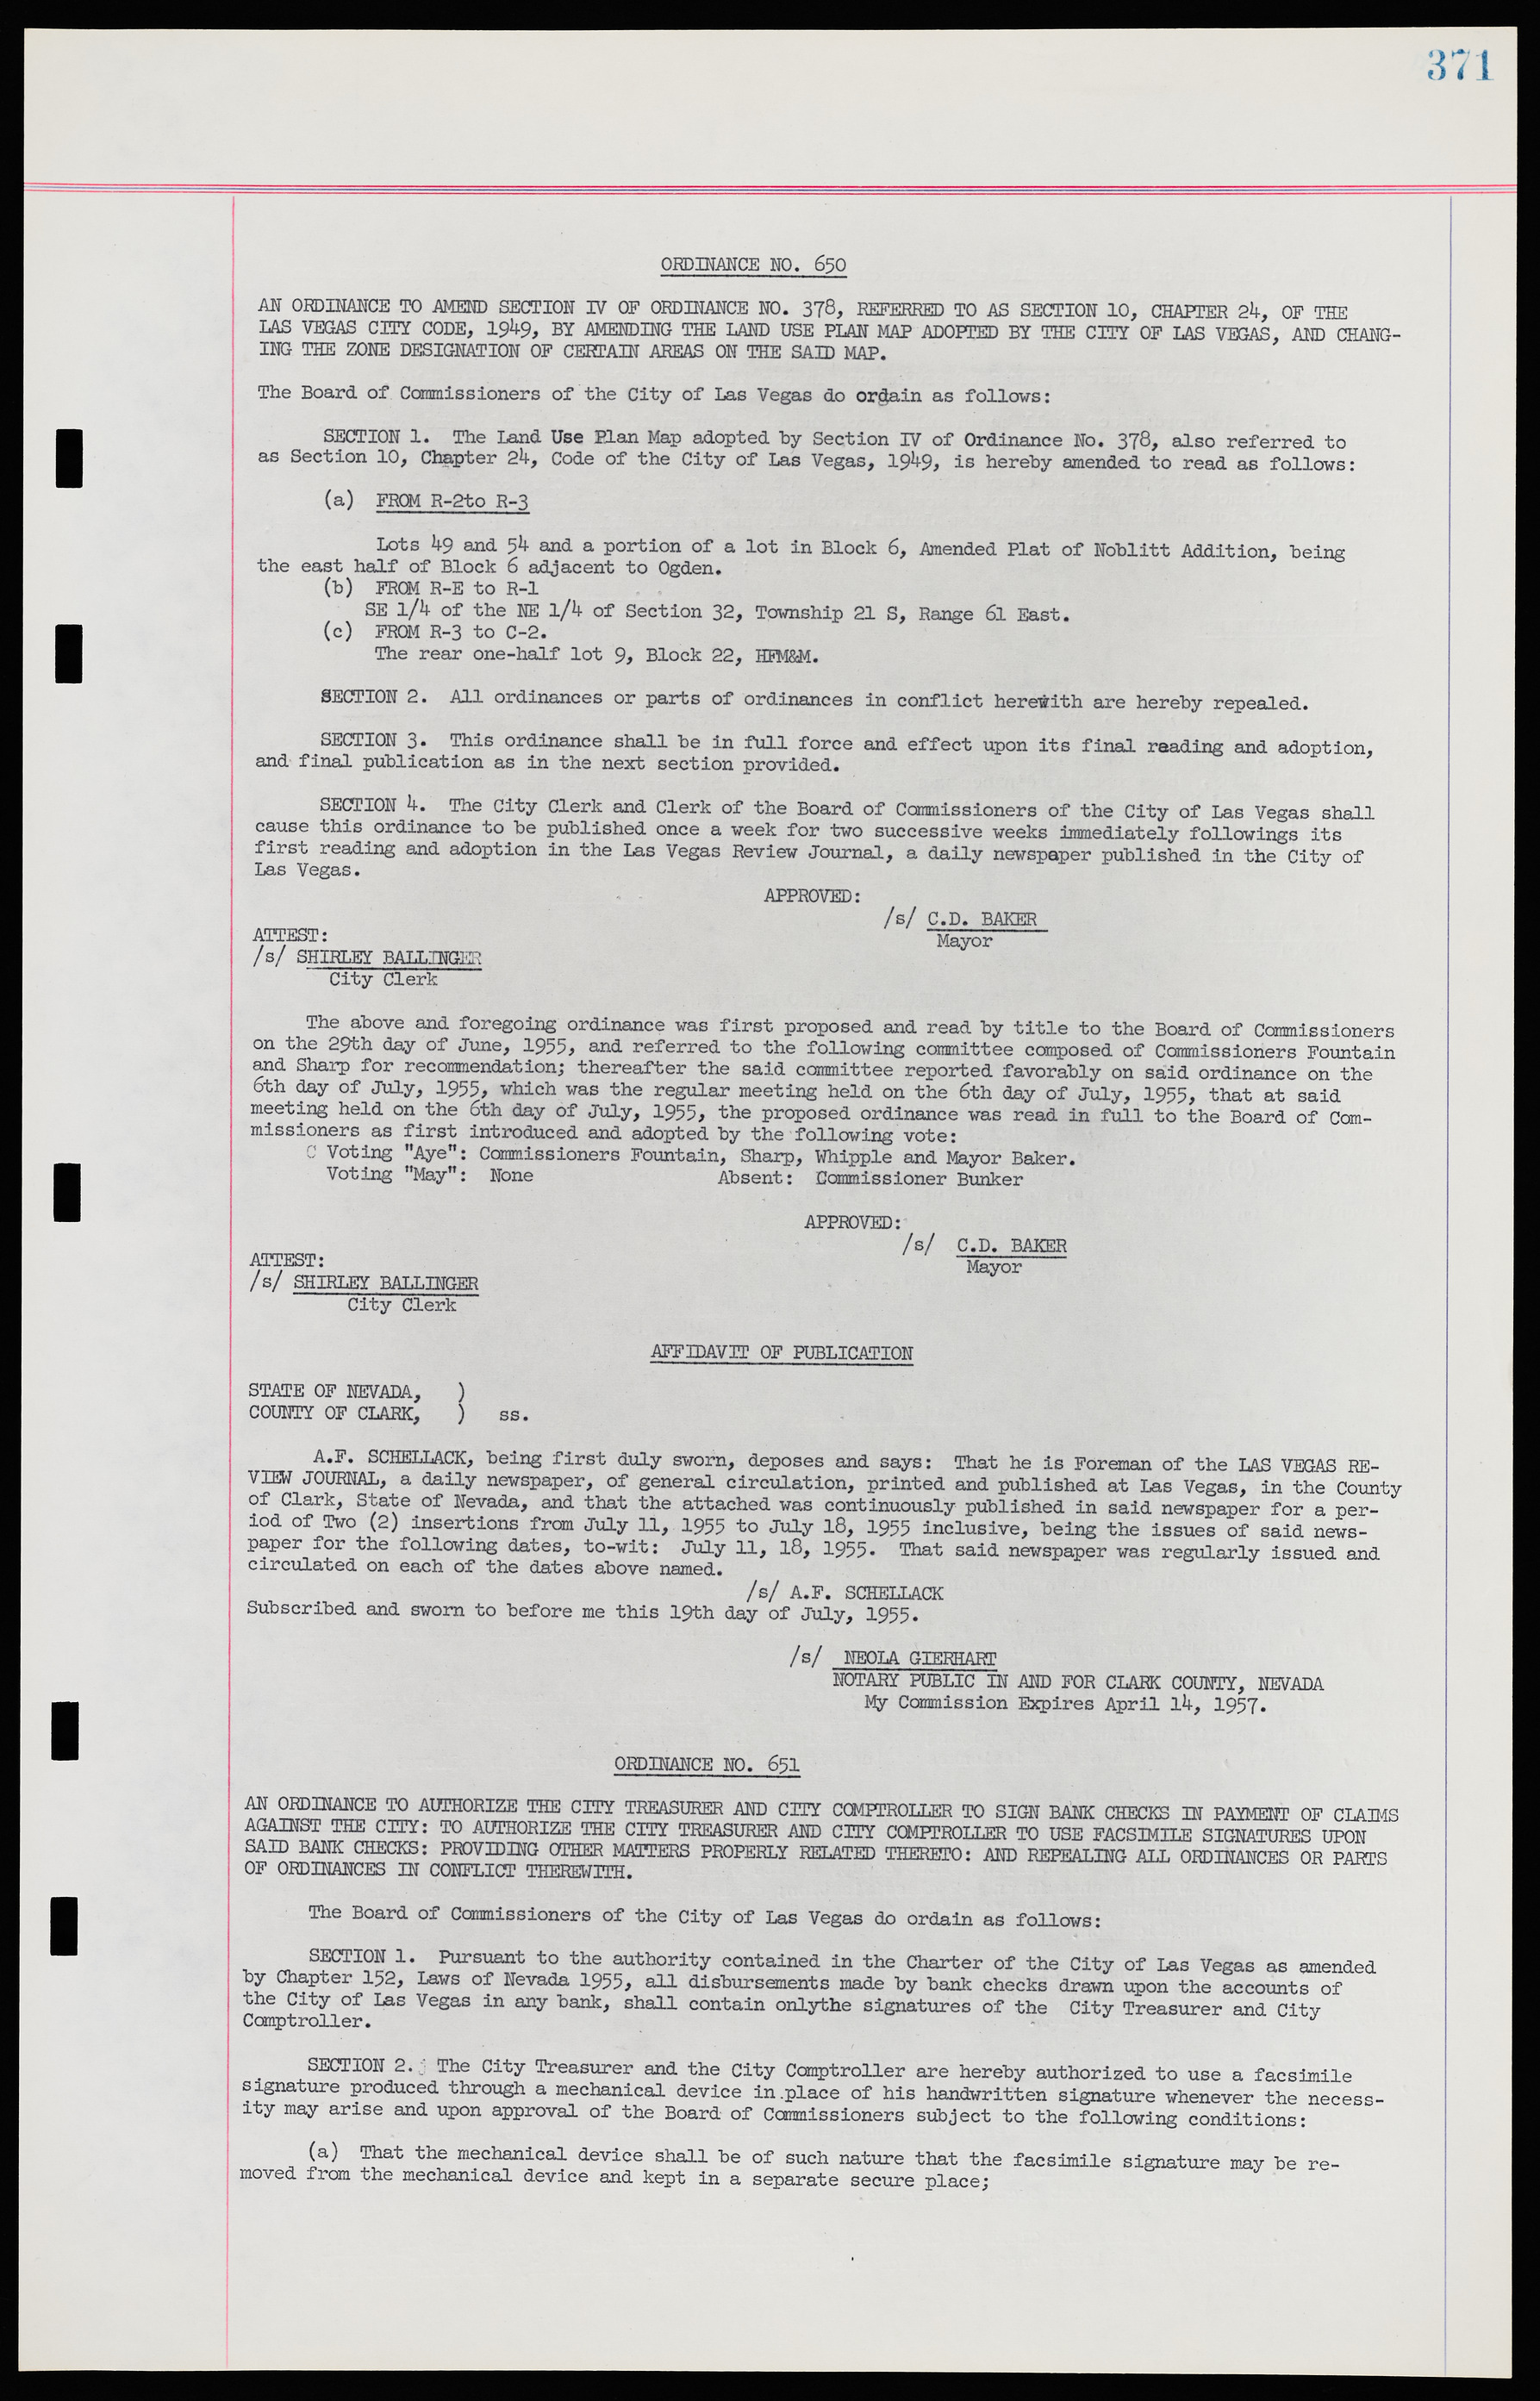 Las Vegas City Ordinances, November 13, 1950 to August 6, 1958, lvc000015-379